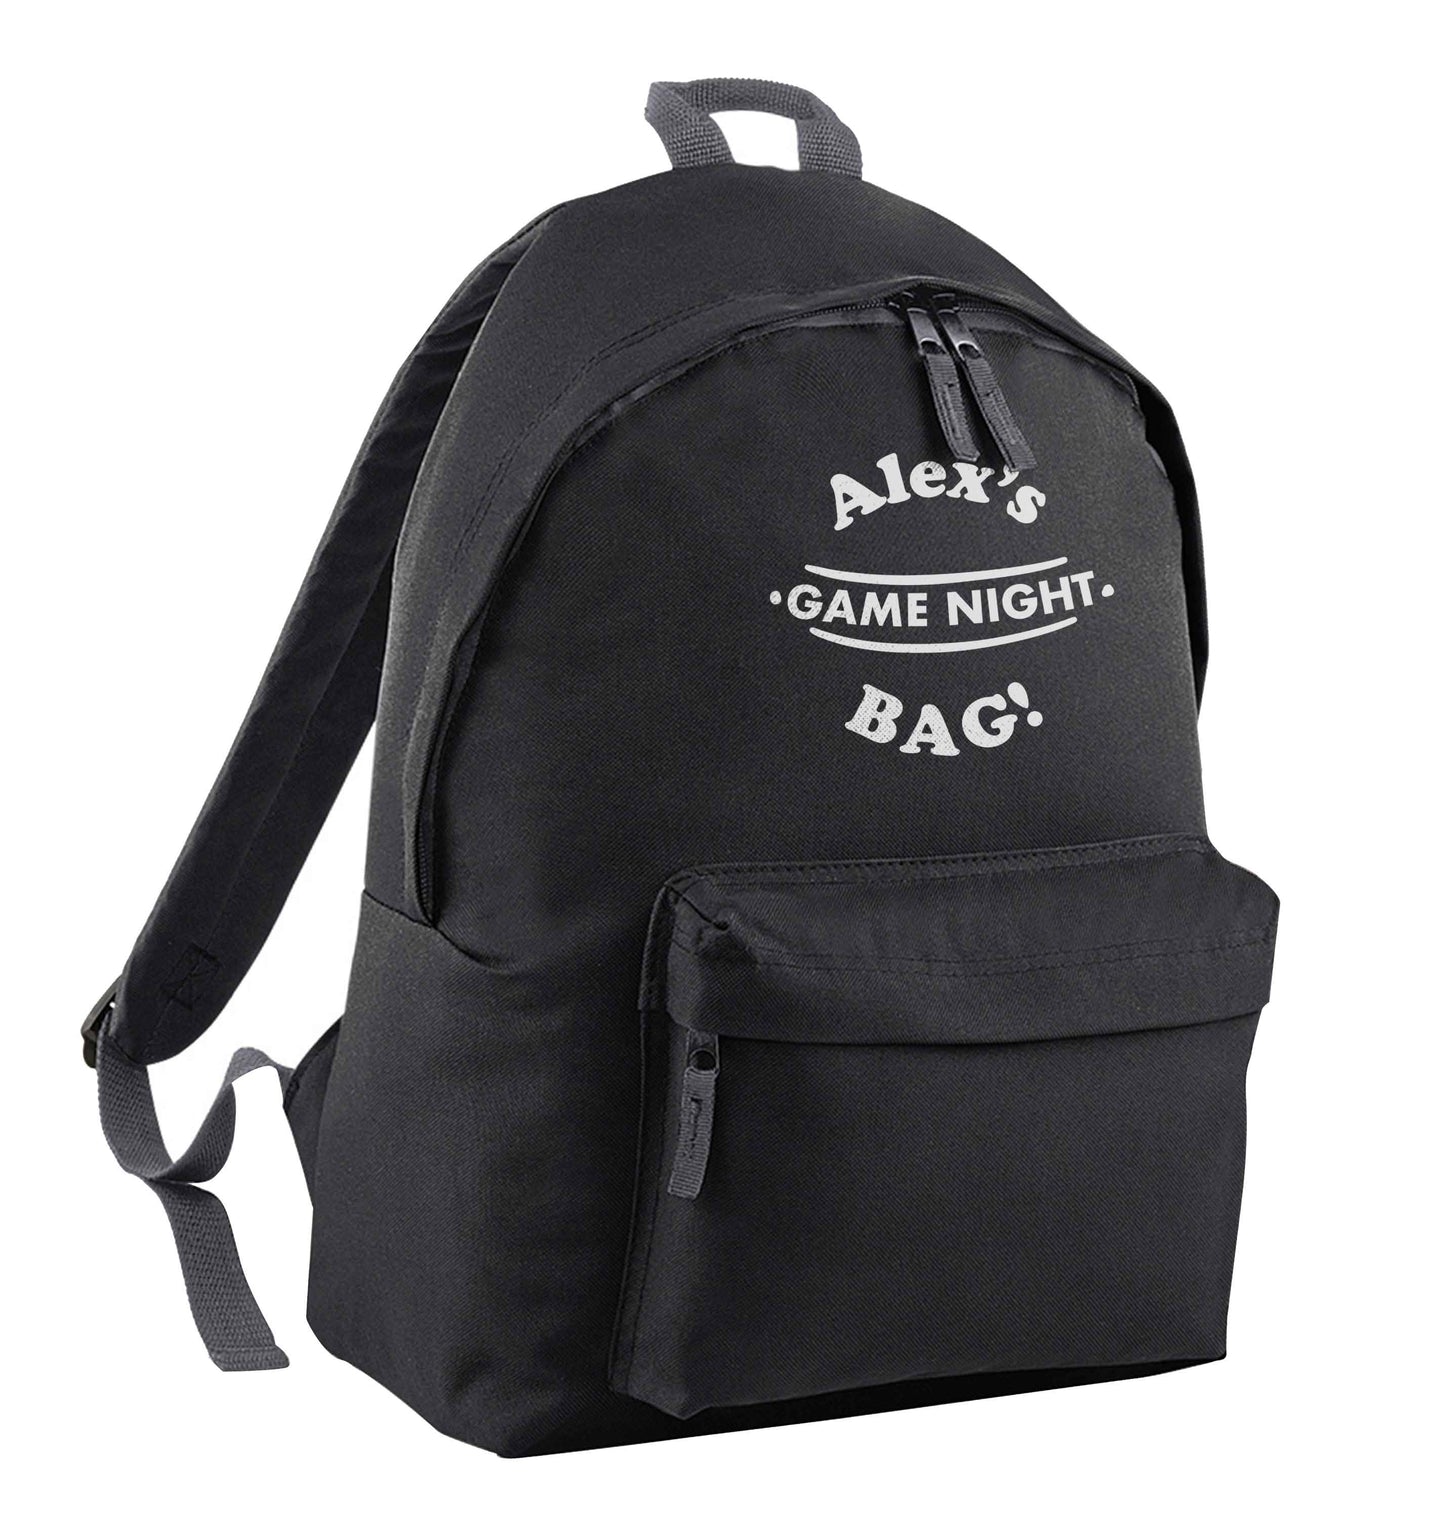 Personalised game night bag black adults backpack